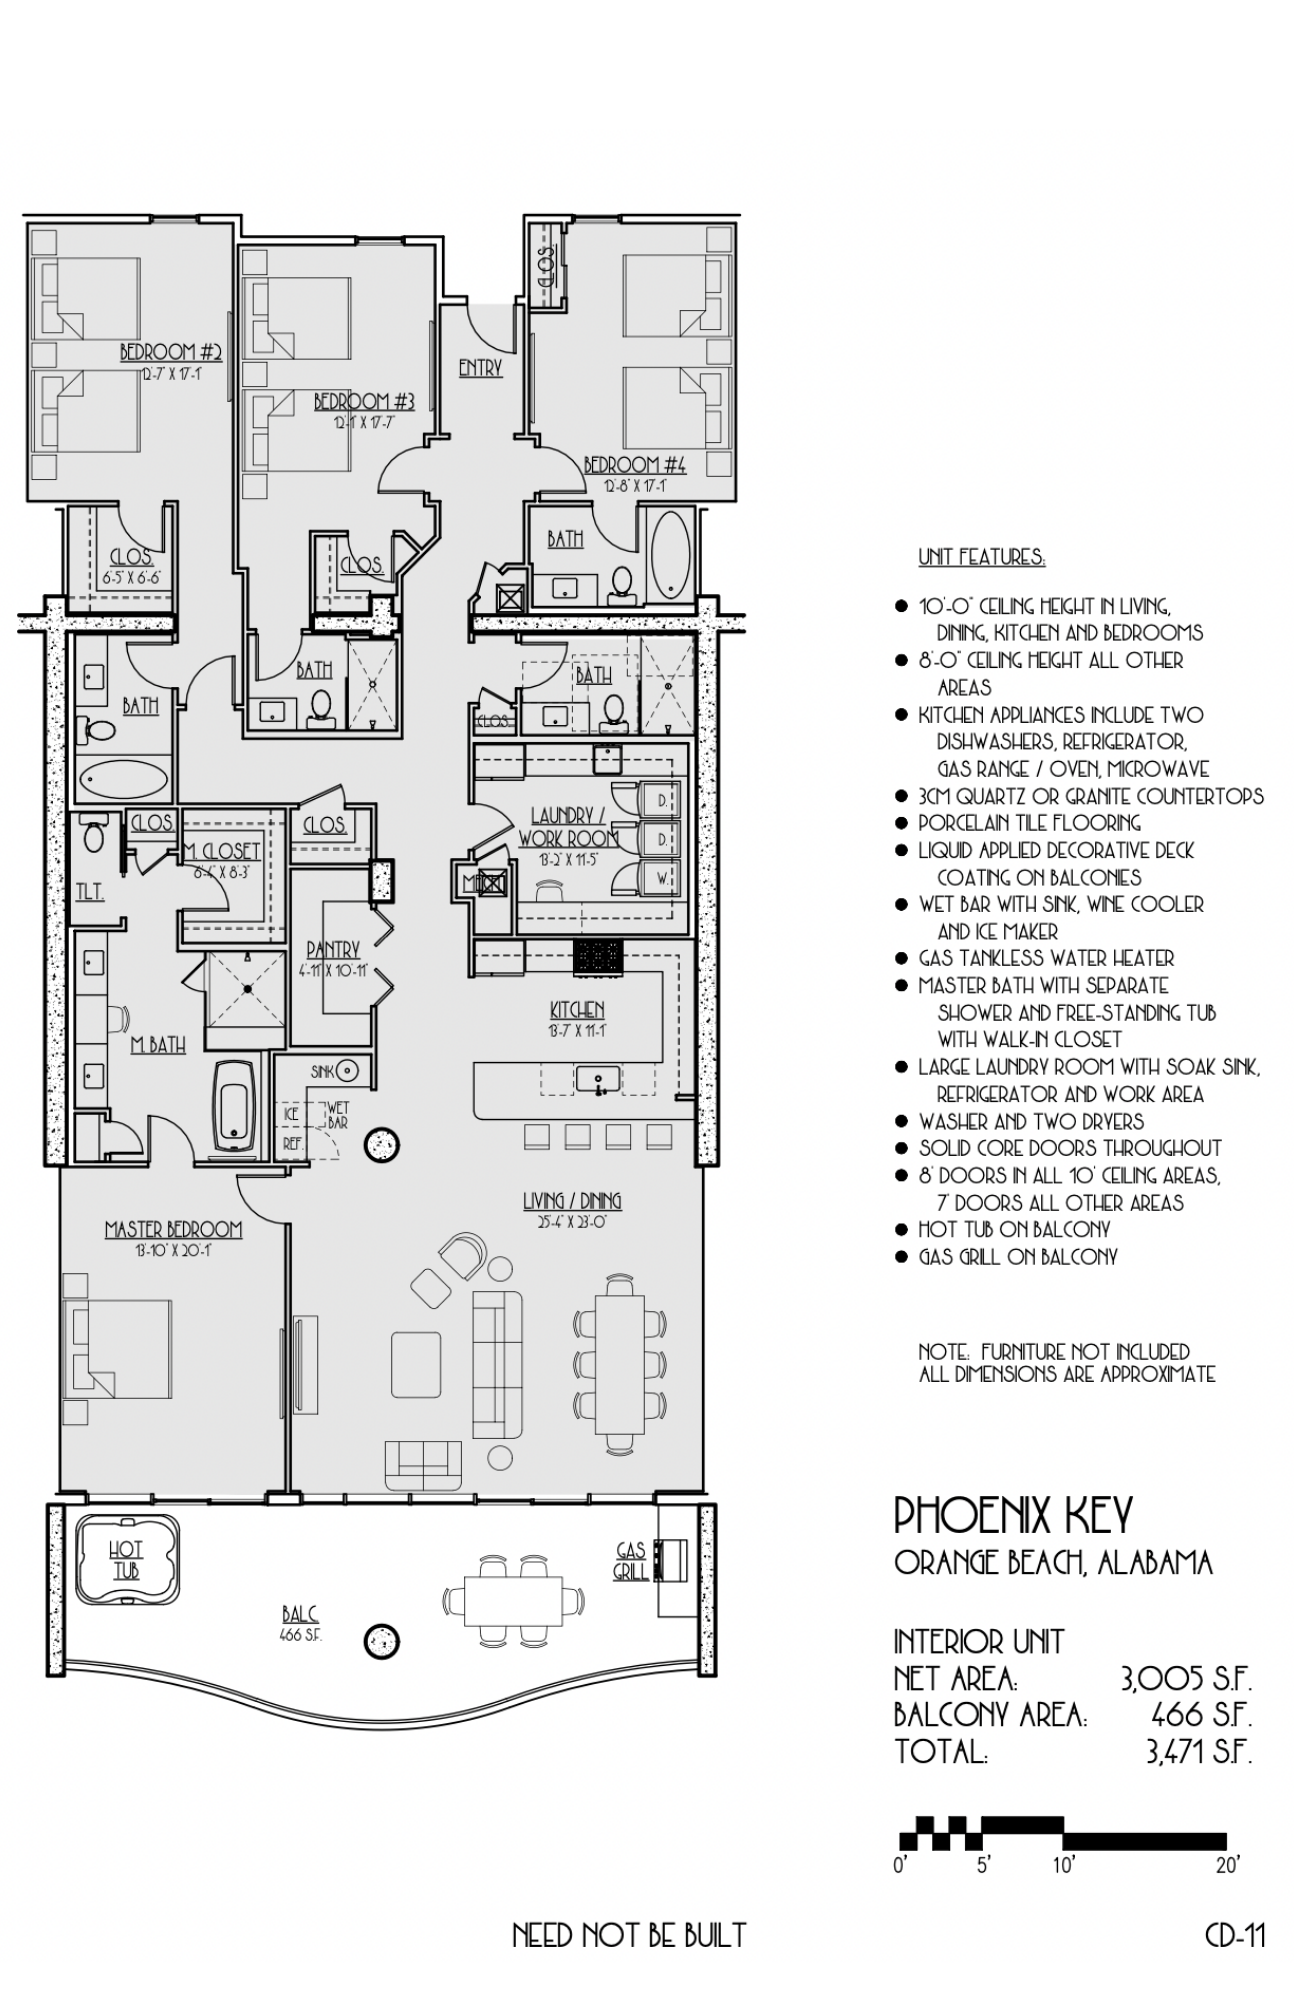 Phoenix Key Interior Unit Floor Plan